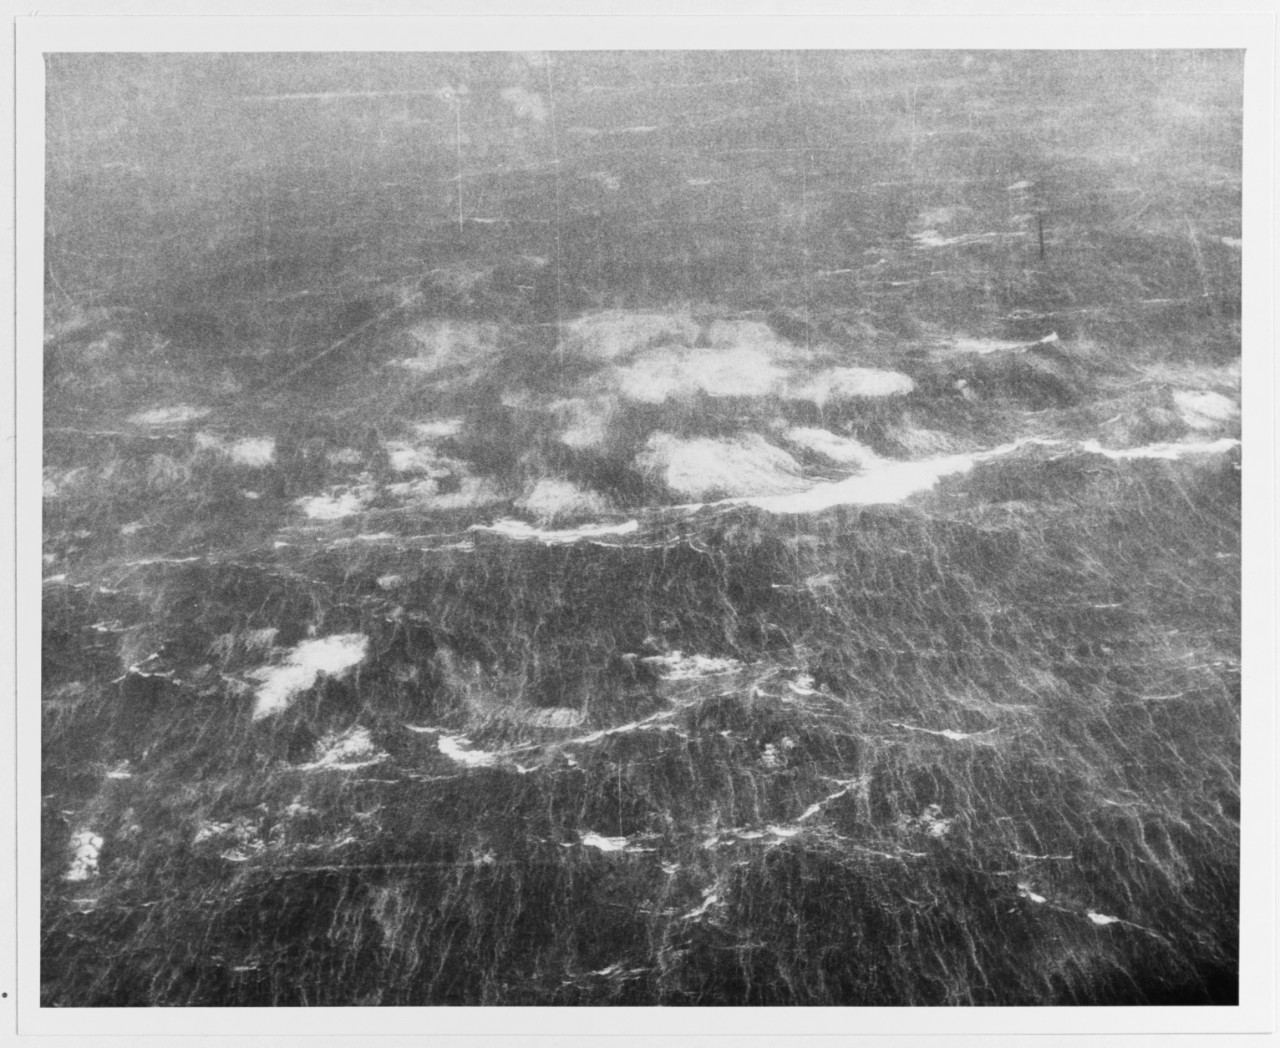 Hurricane Hazel, March 1955